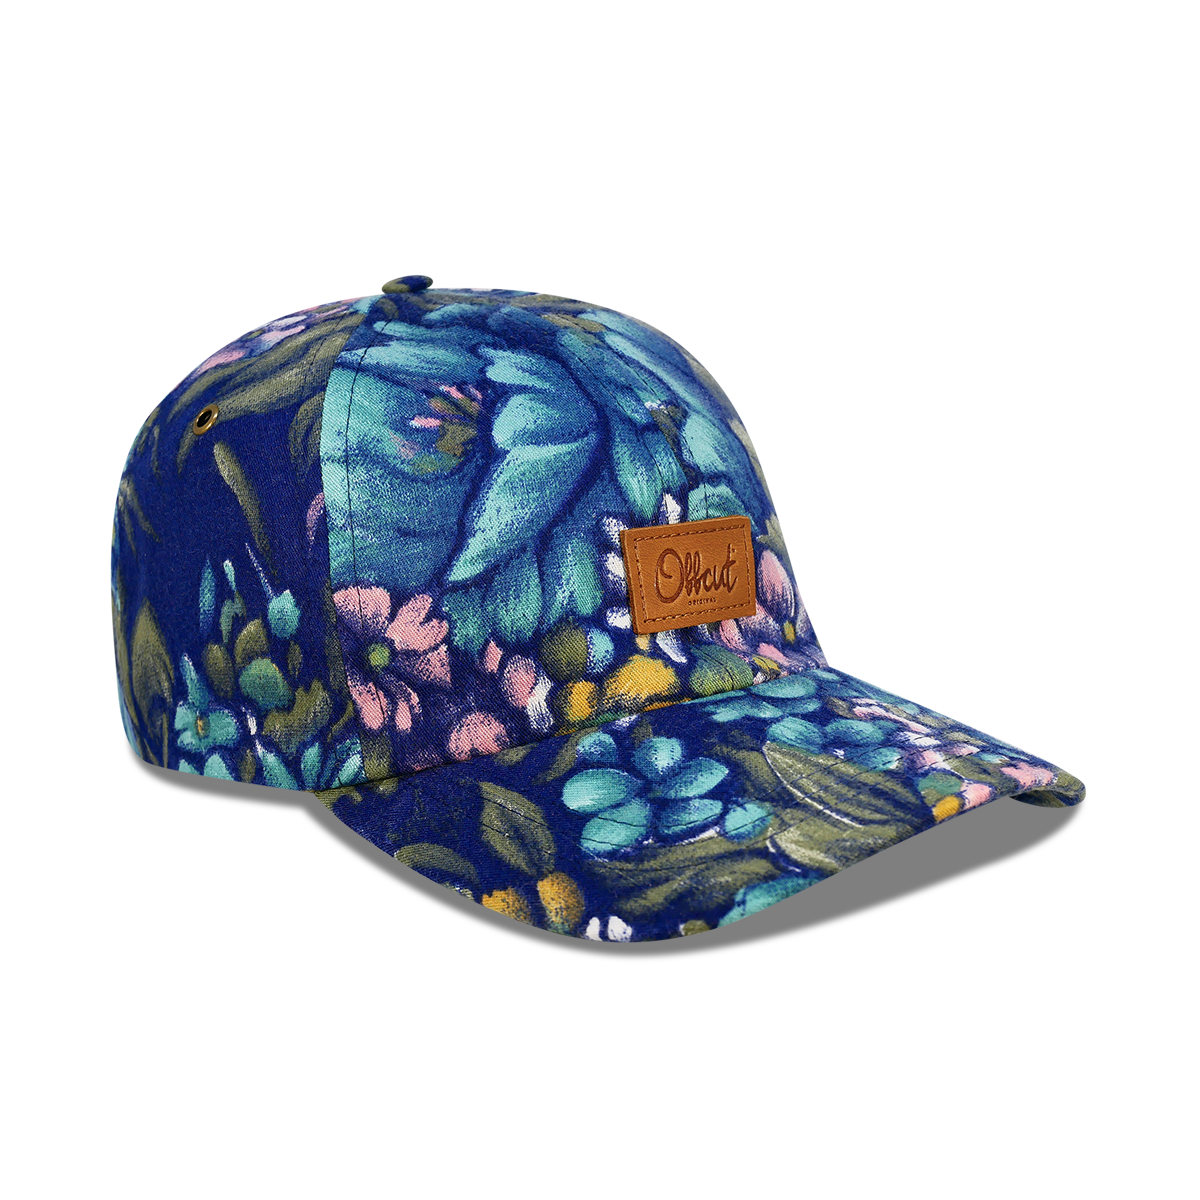 Turquoise Garden  - 6 panel dad hat